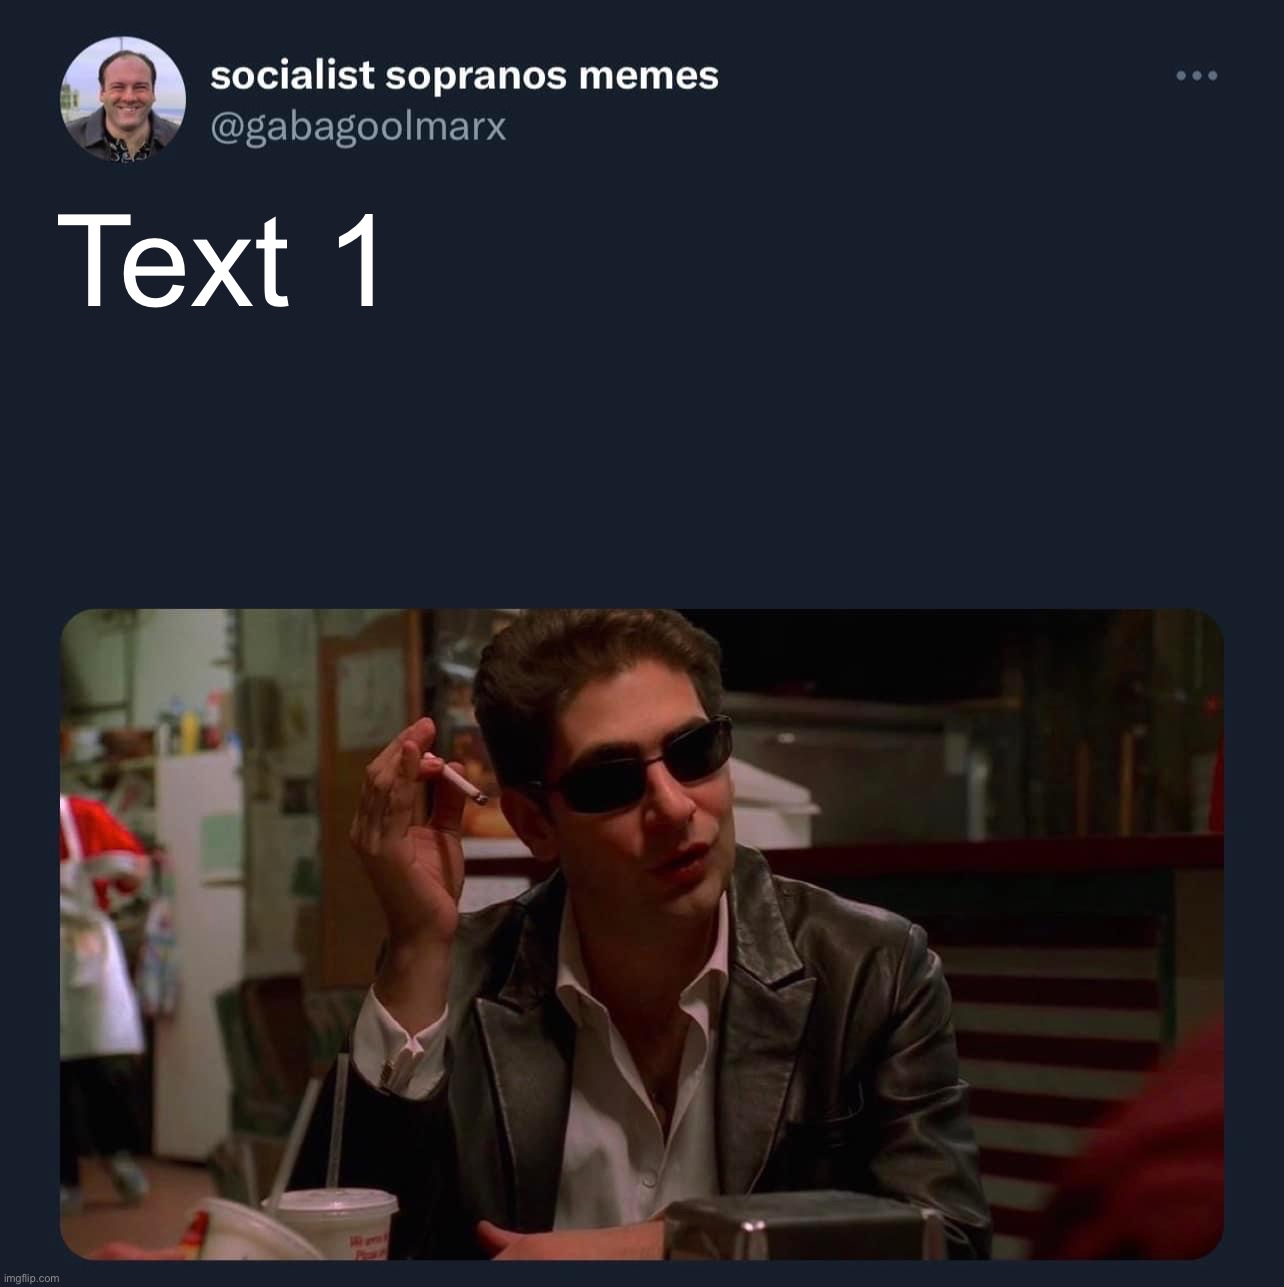 Socialist Sopranos memes template | Text 1 | image tagged in socialist sopranos memes template | made w/ Imgflip meme maker